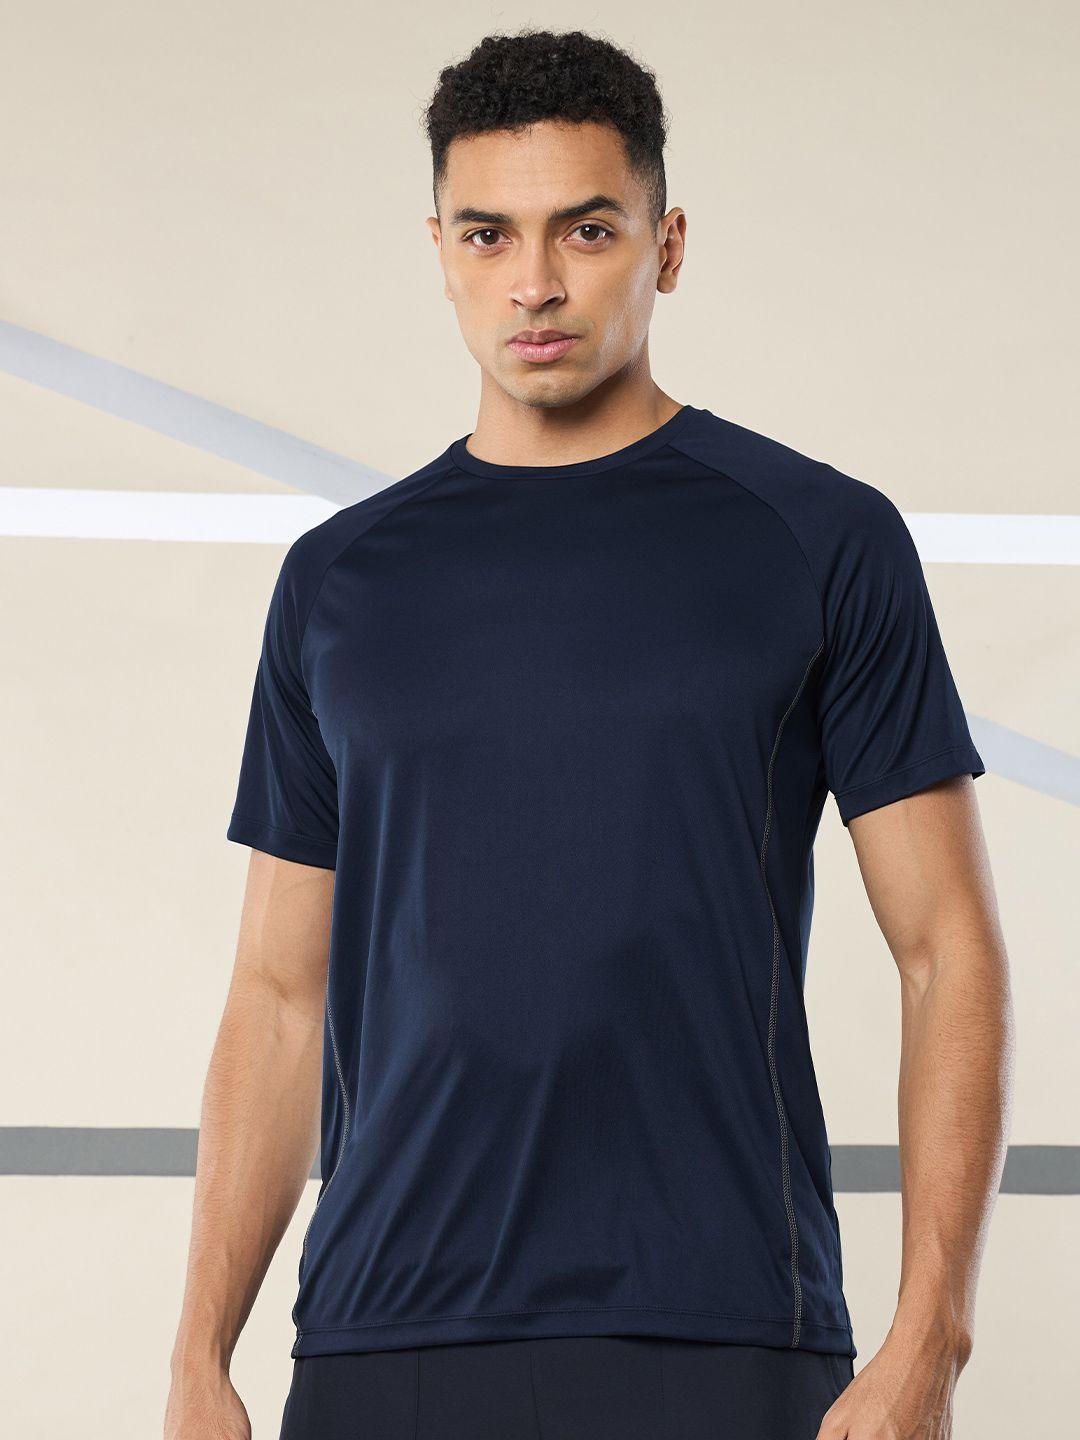 cultsport round neck raglan sleeves dri-fit sports t-shirt